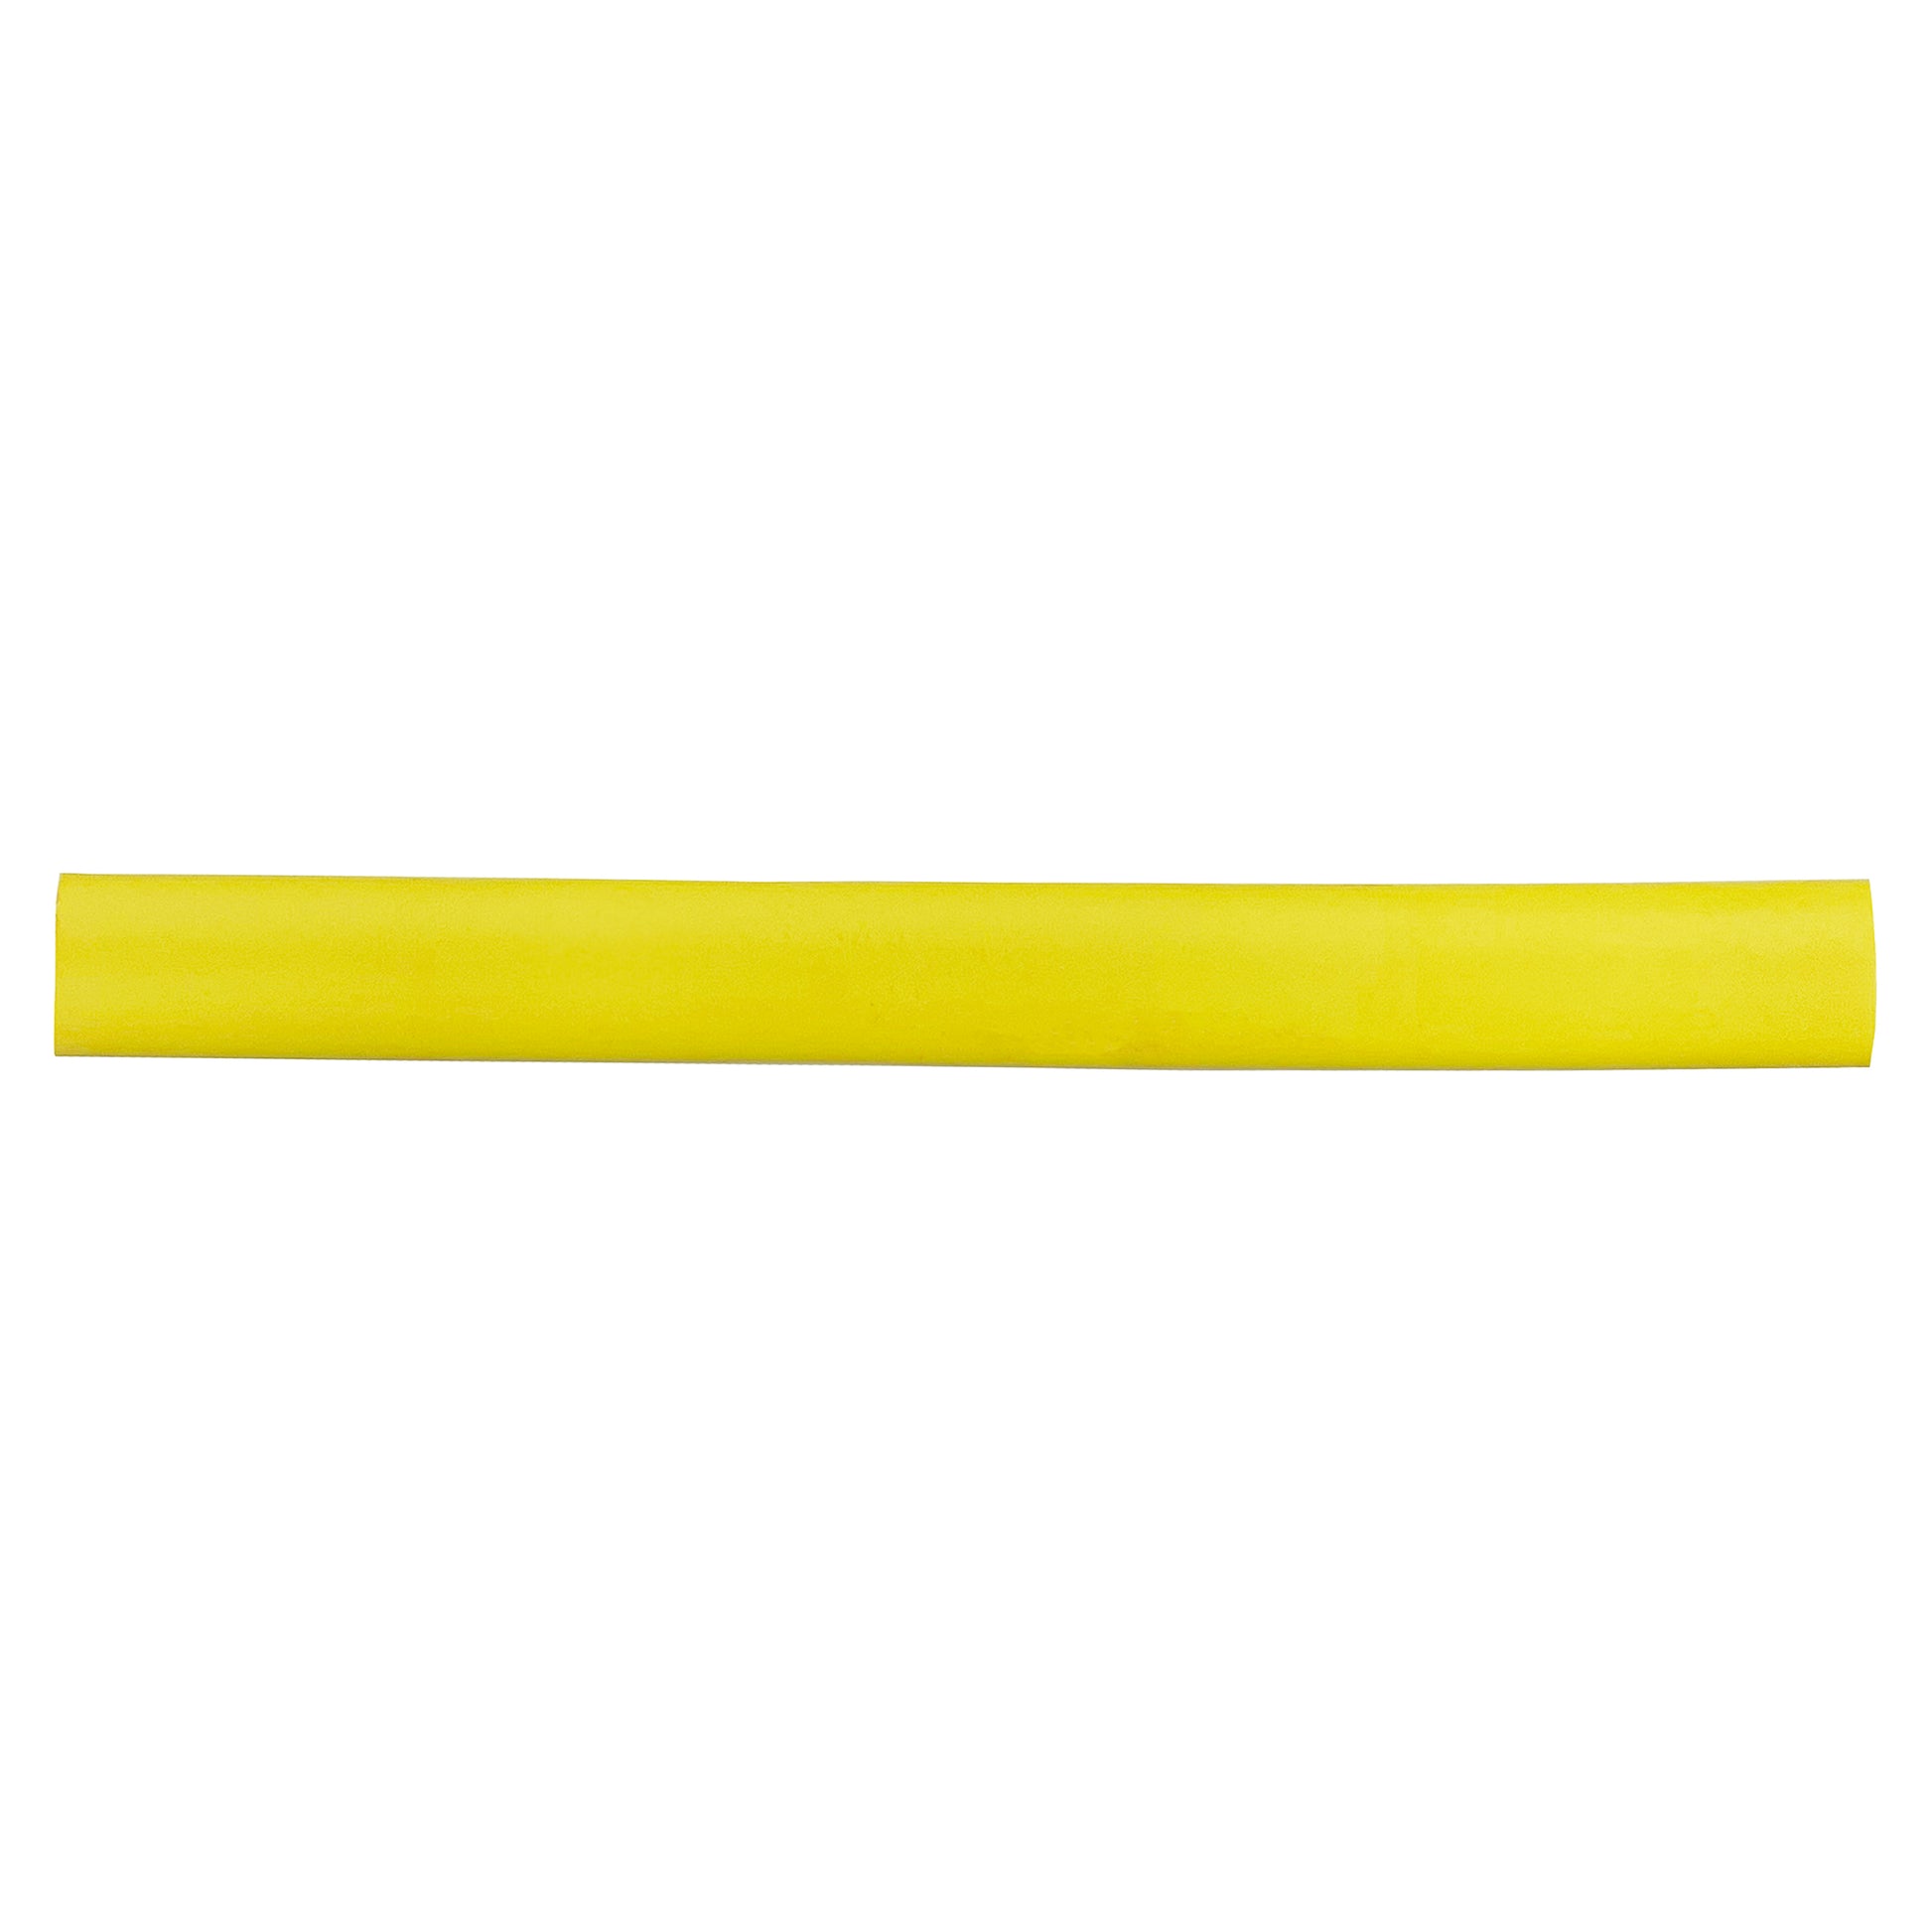 Flexible Thin Single Wall Non-Adhesive Heat Shrink Tubing 2:1 Yellow 3/8" ID - 100' Ft Spool